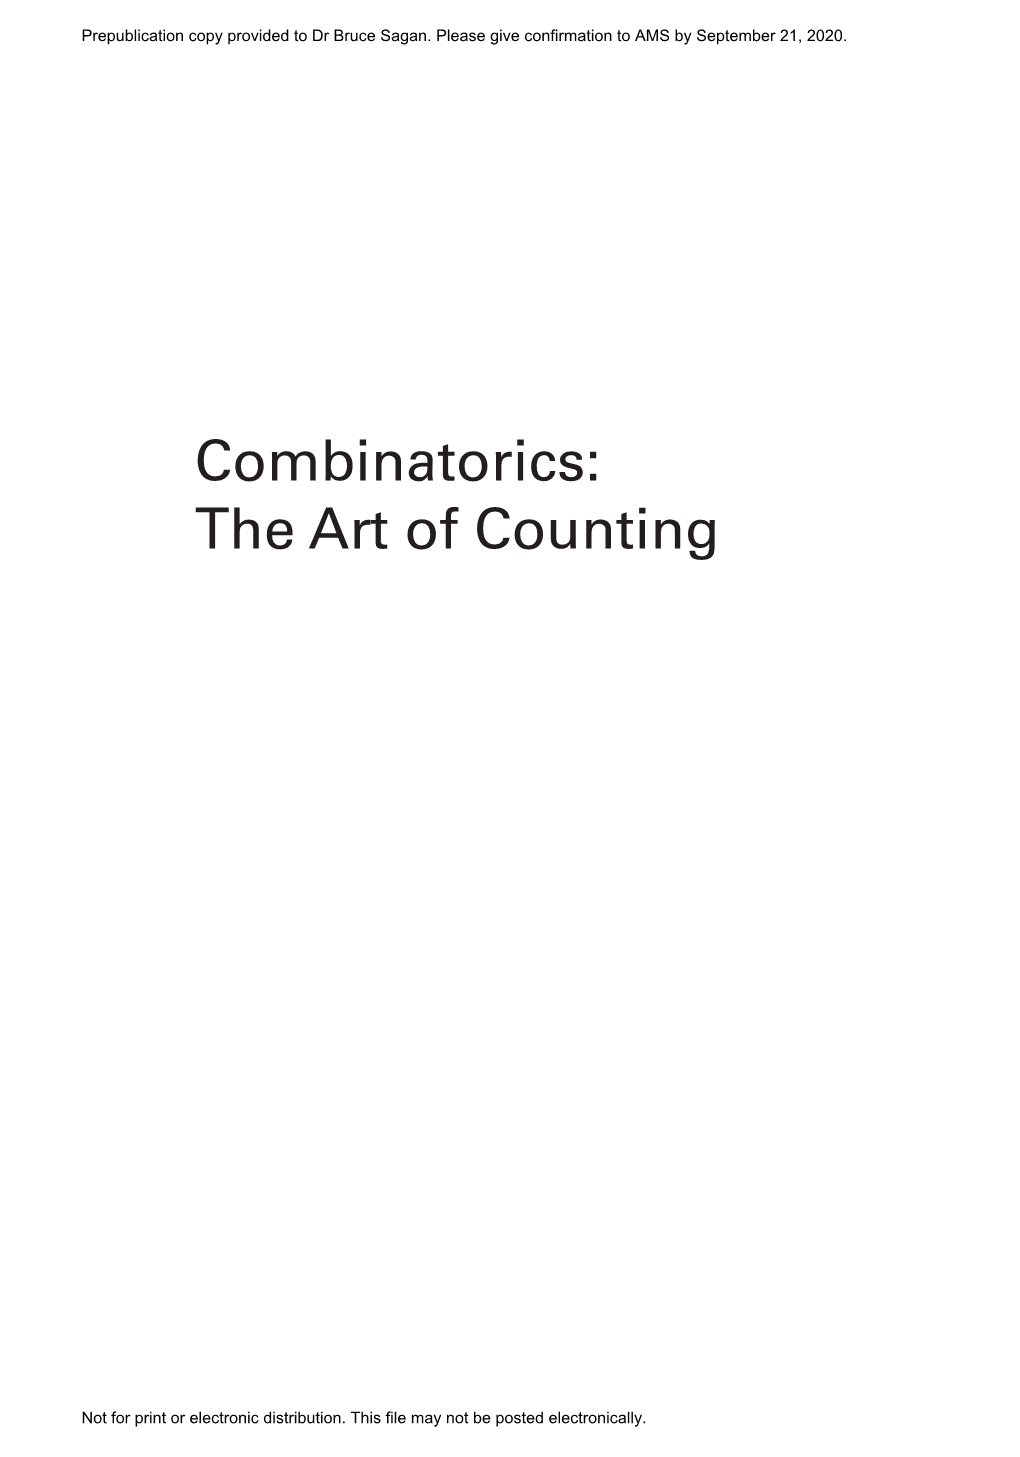 Combinatorics: the Art of Counting